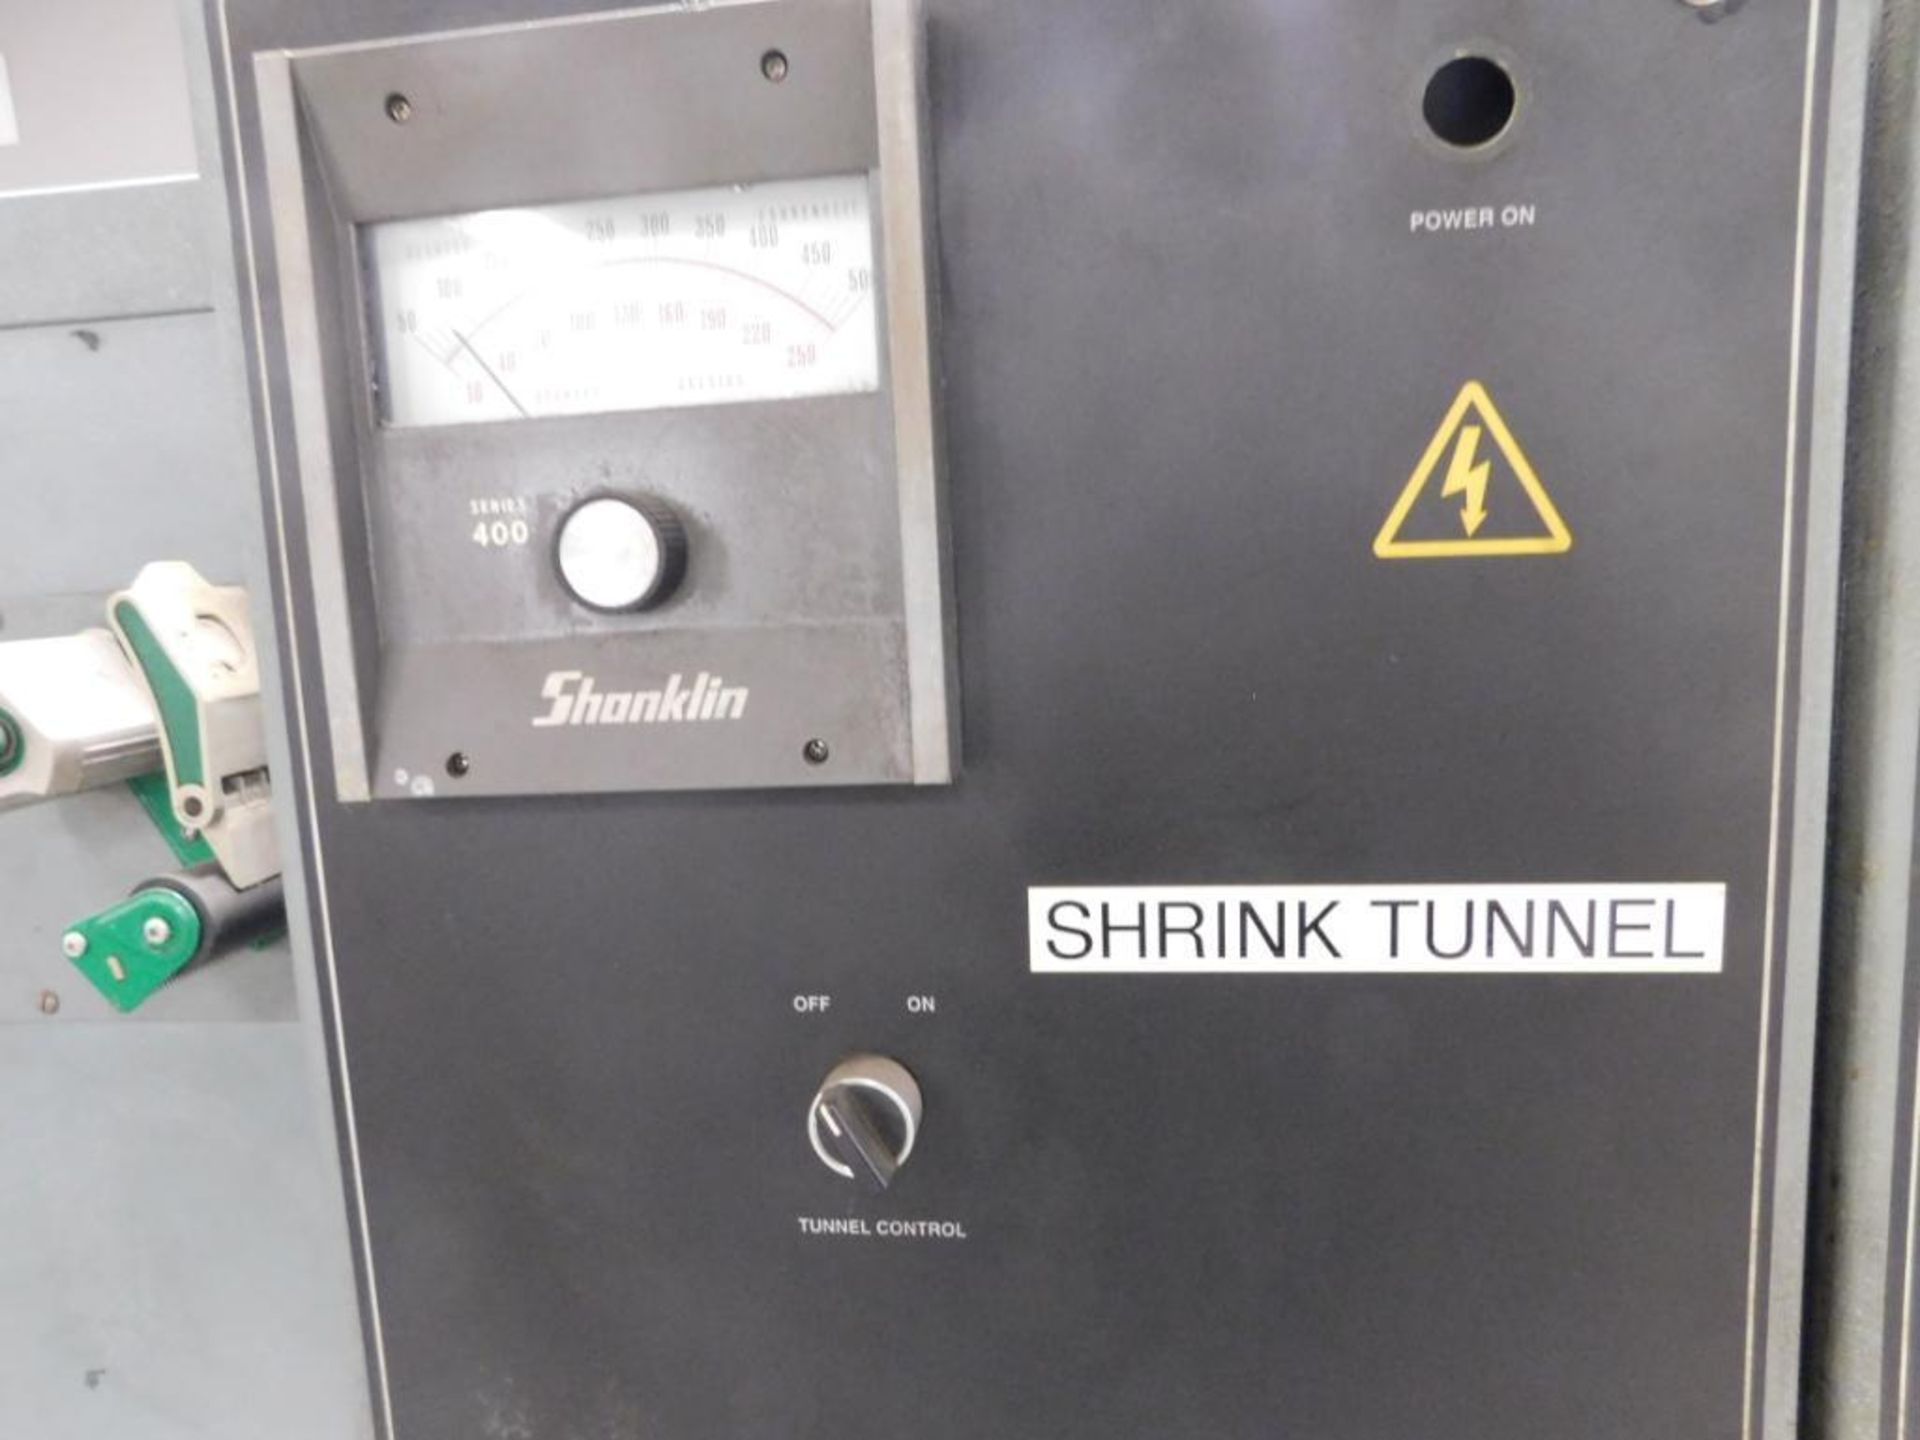 SHANKLIN PASS THROUGH HEAT SHRINK TUNNEL, MODEL T62, S/N T00299, 16'', 230 V., 3-PH - Image 3 of 3